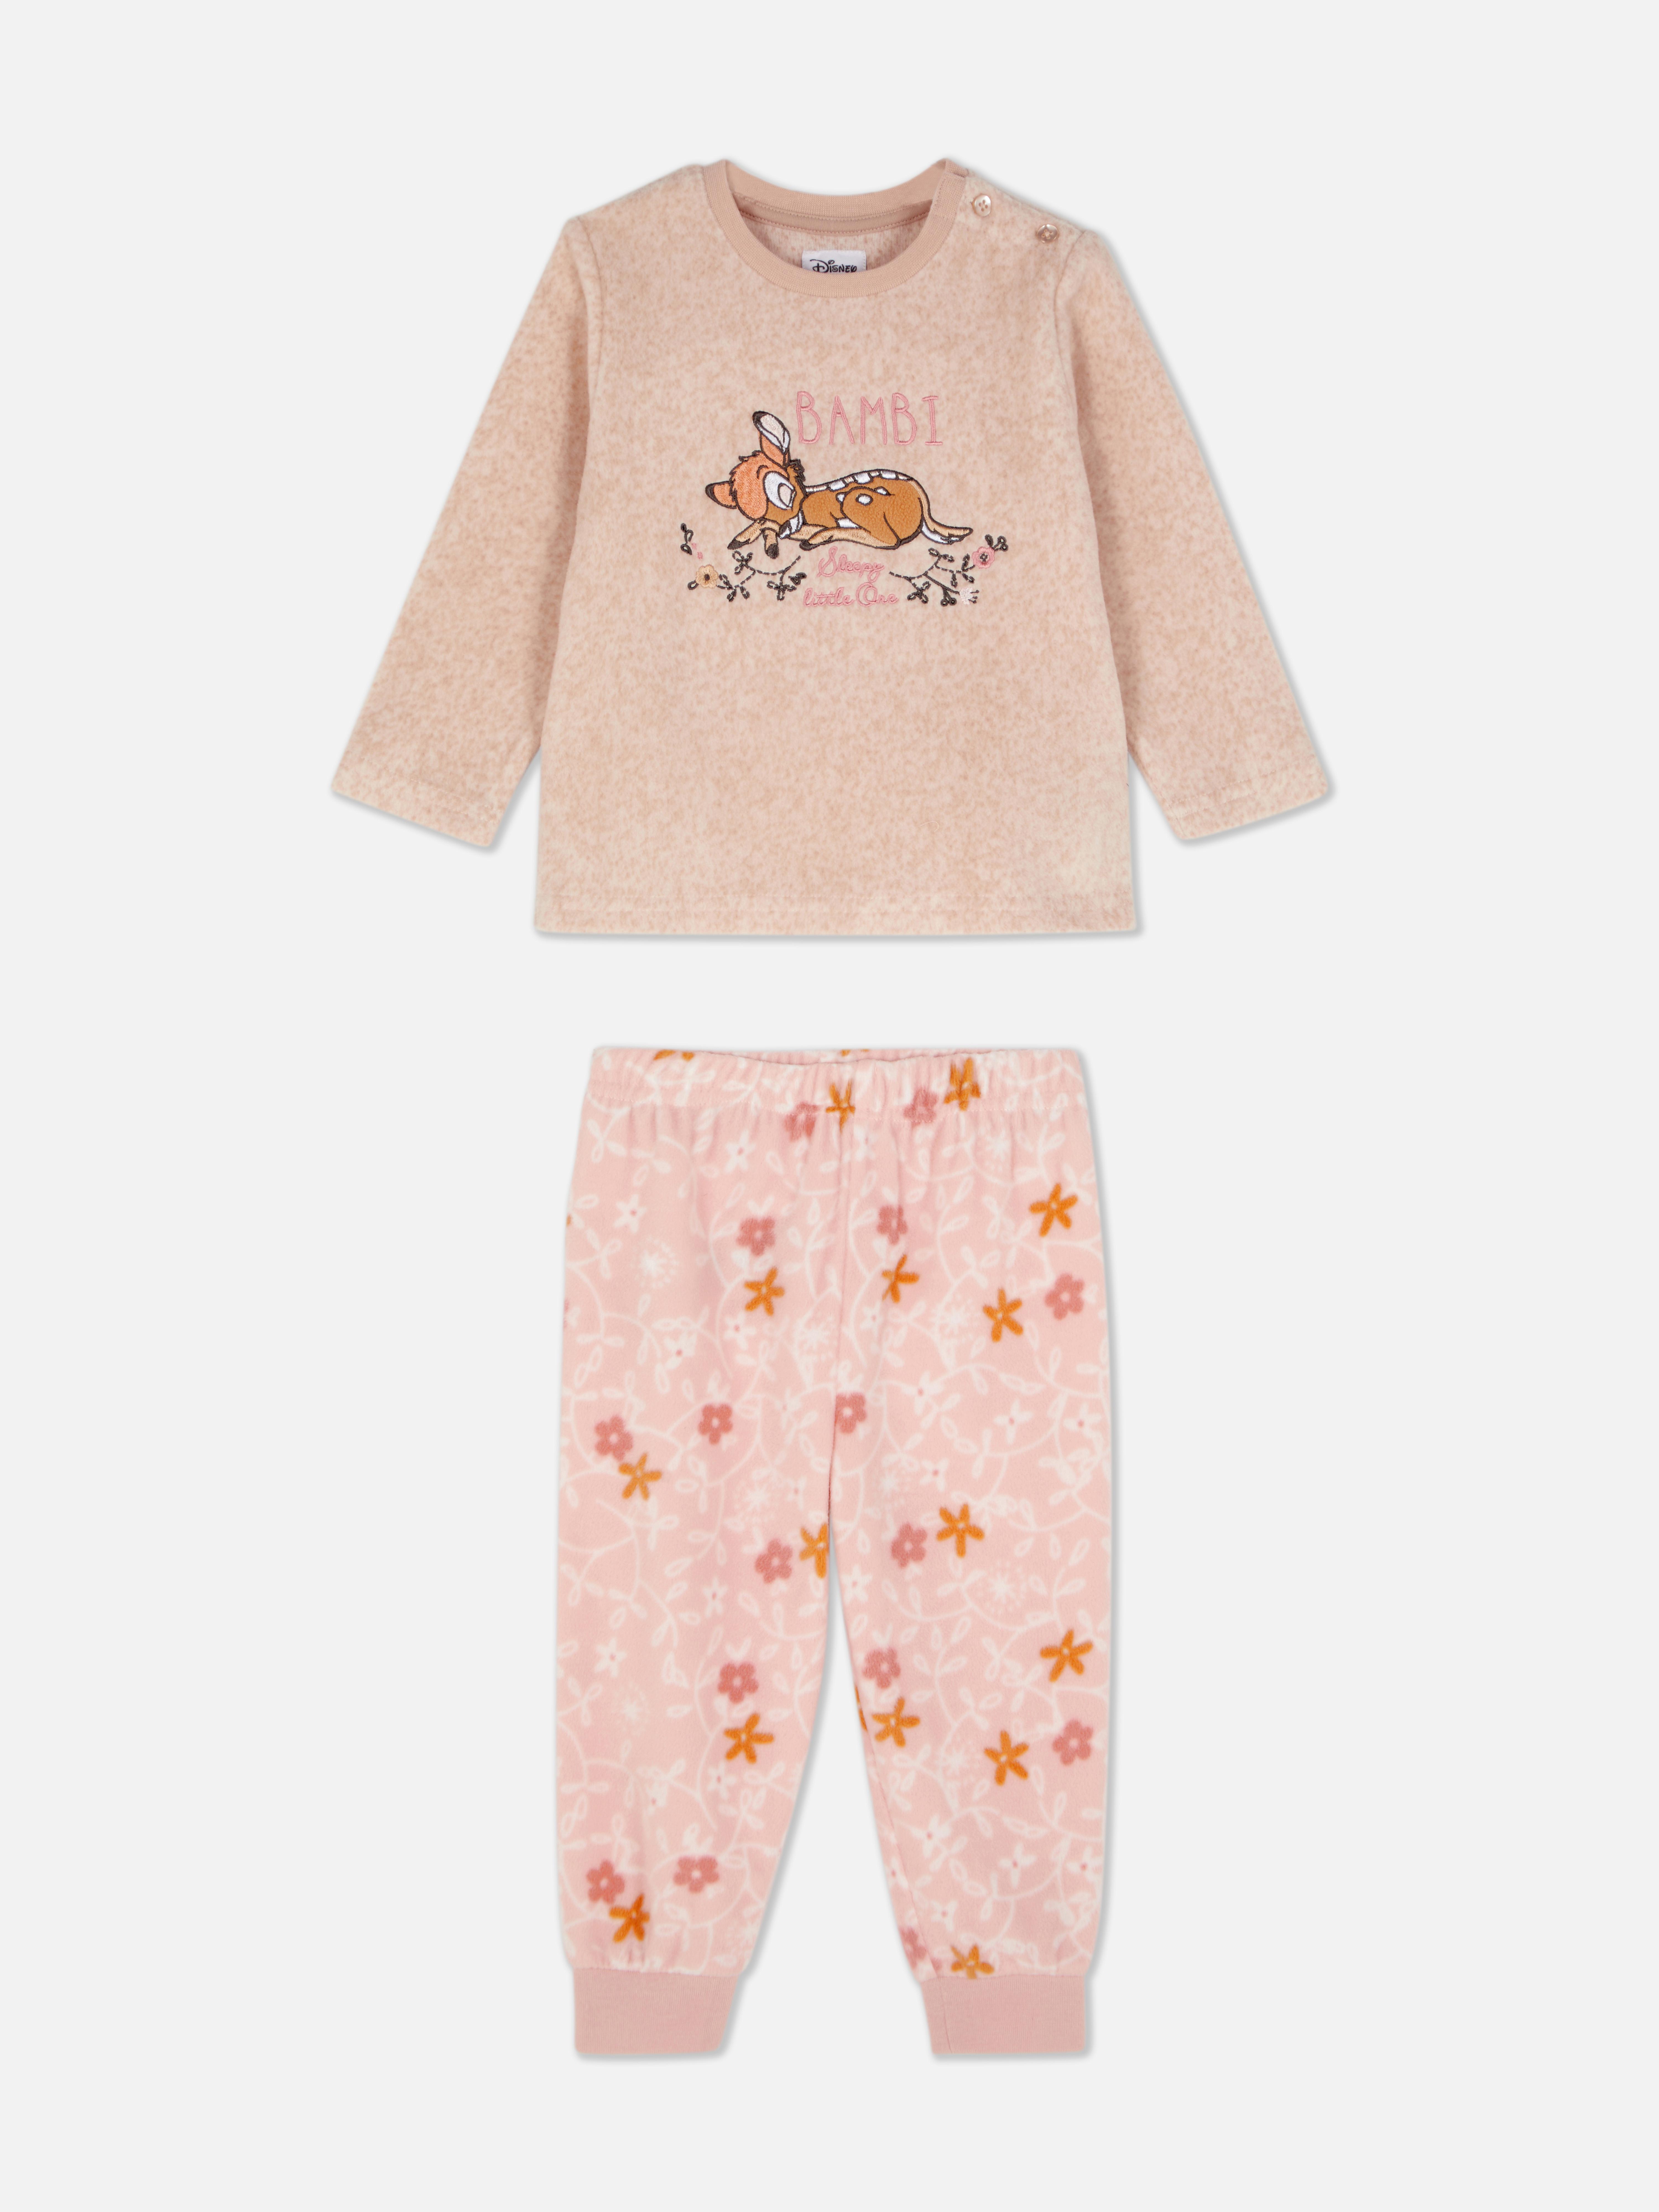 Disney’s Bambi Fleece Pyjamas